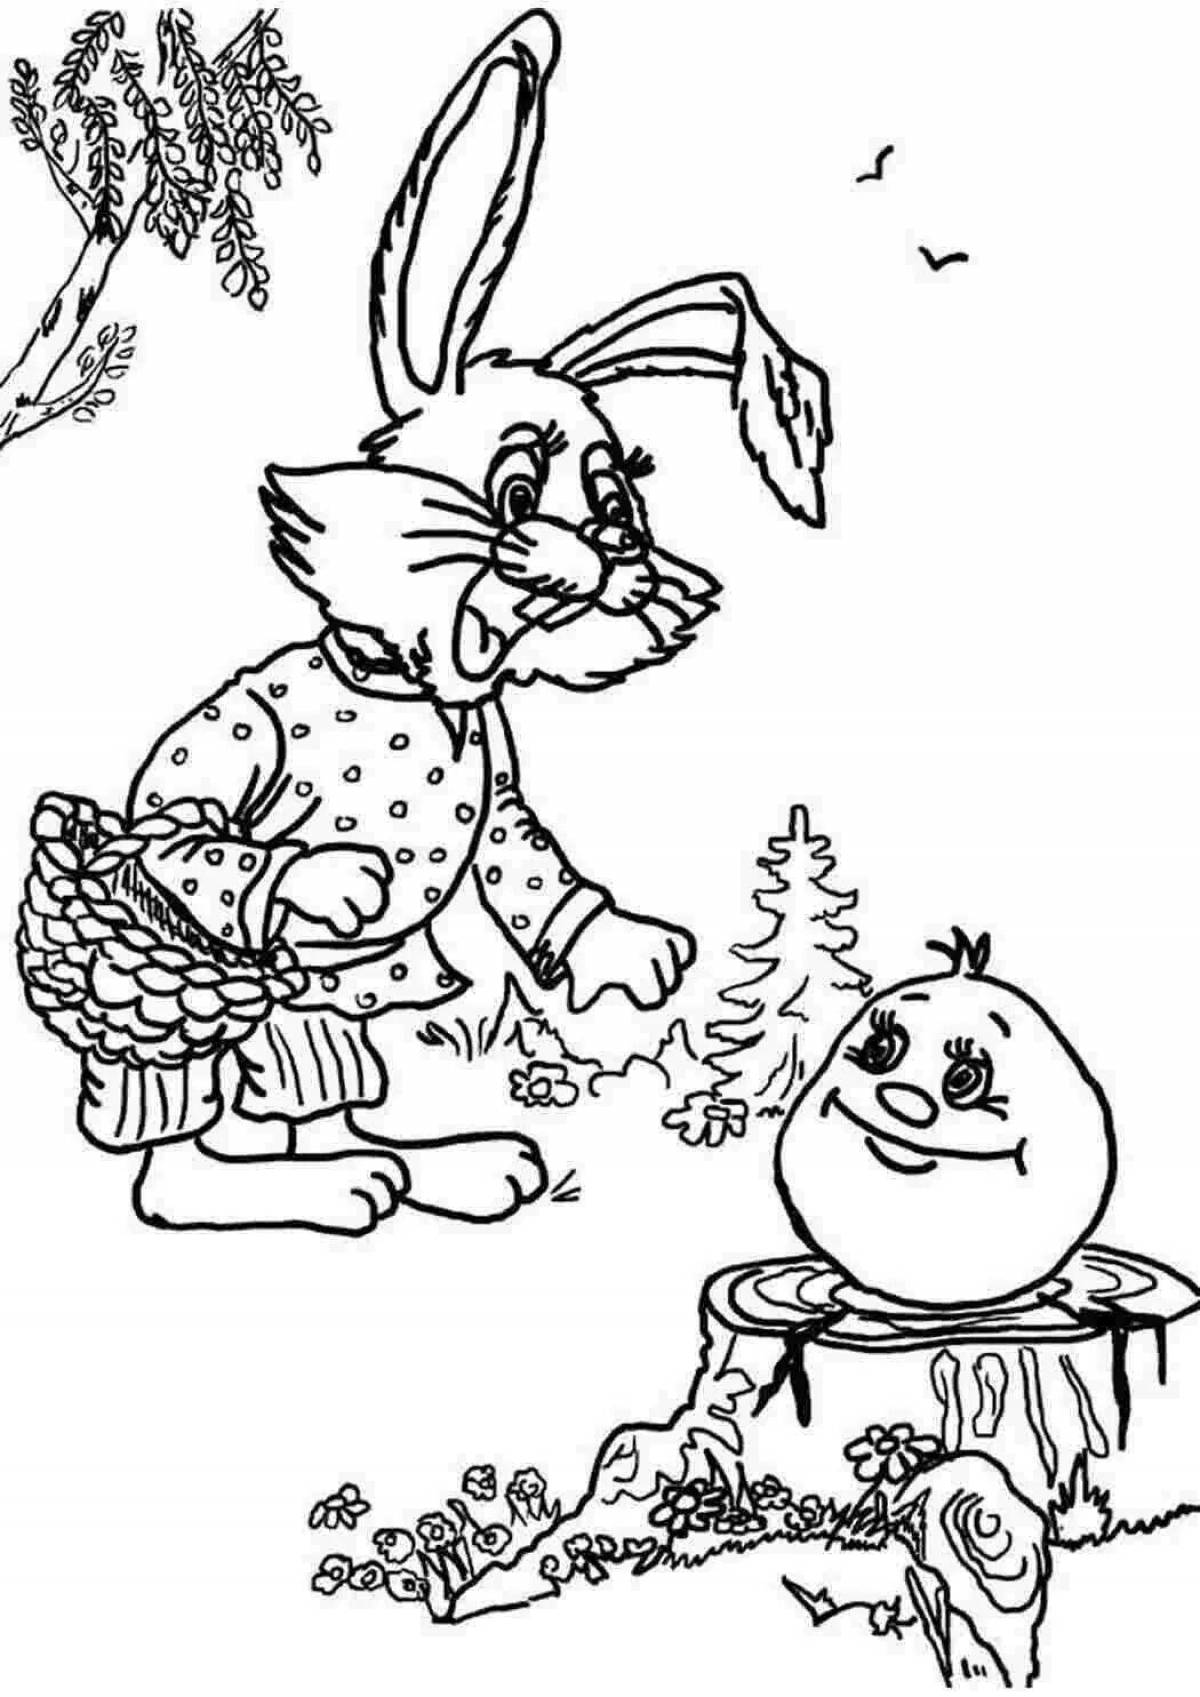 Bright kolobok illustration for a fairy tale